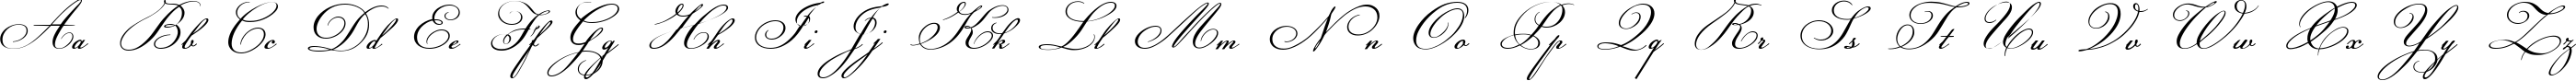 Пример написания английского алфавита шрифтом Champignon script